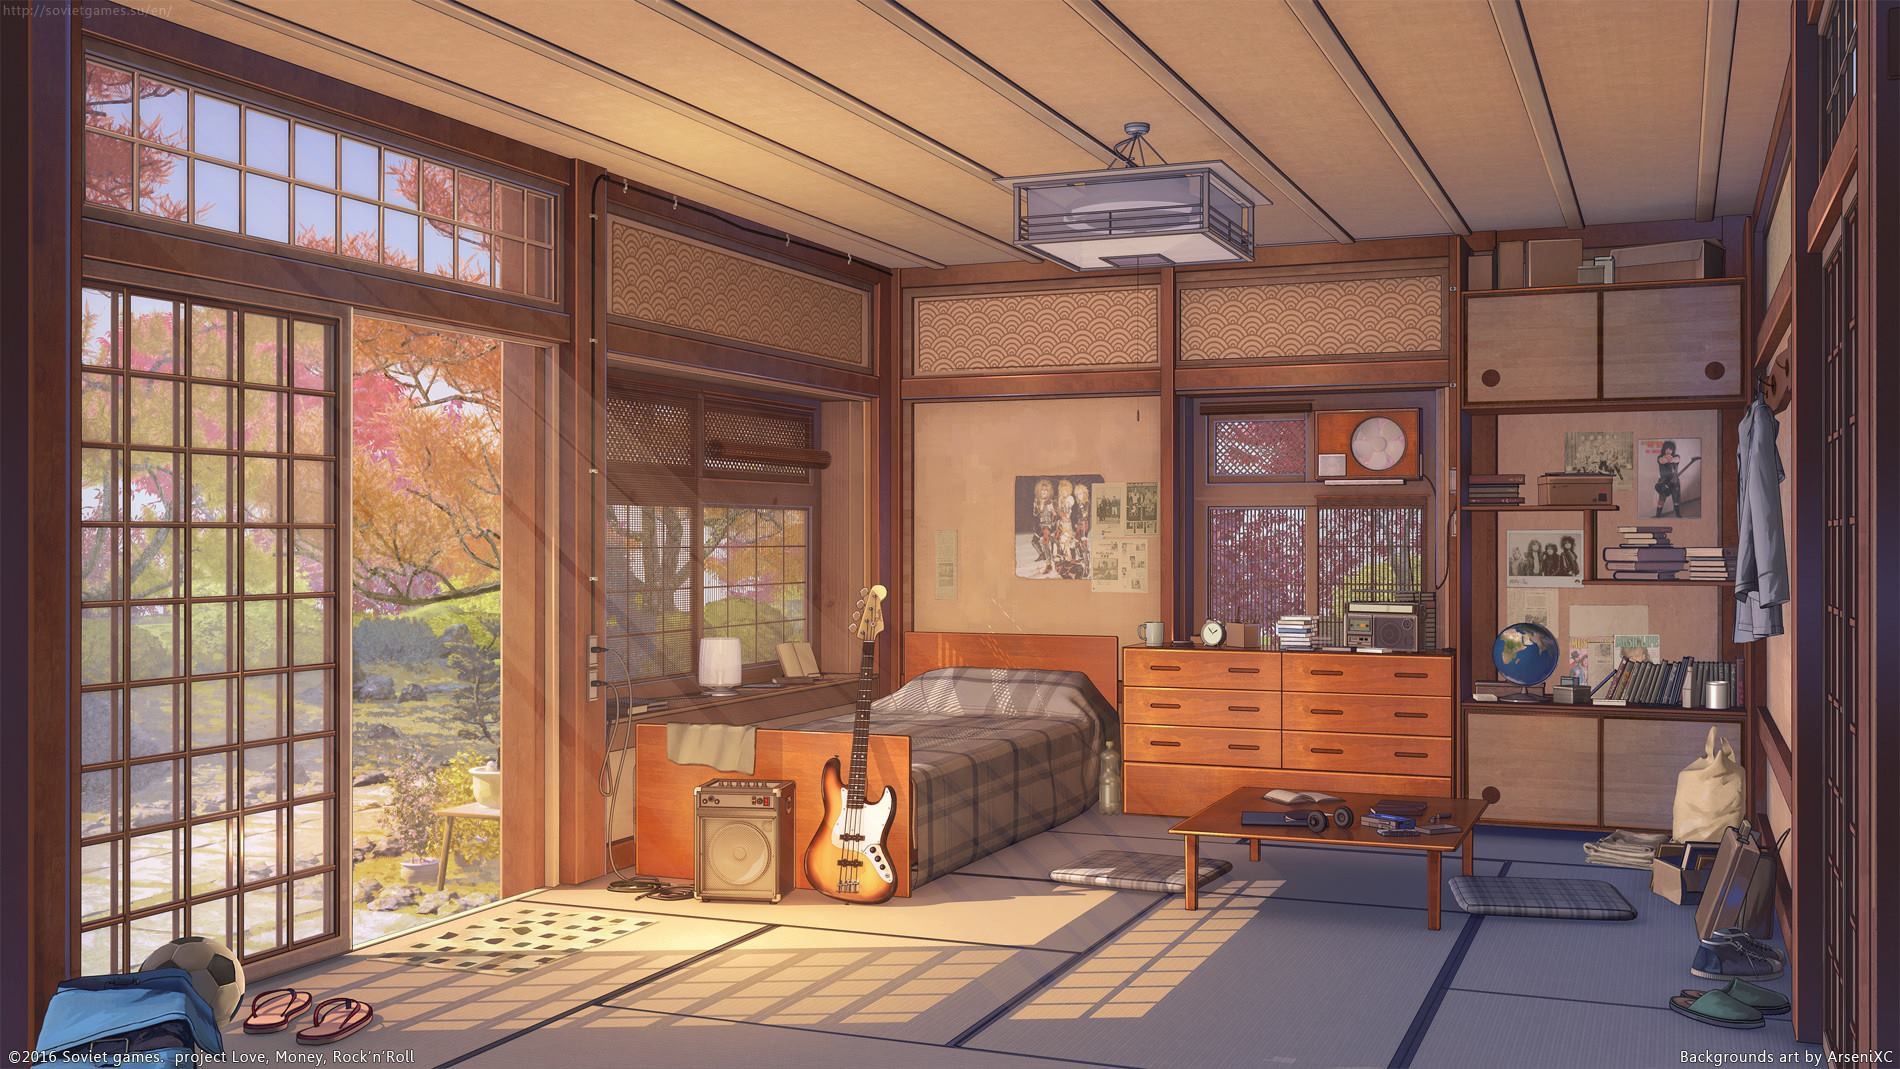 Himitsu house interior by arsenixc on DeviantArt